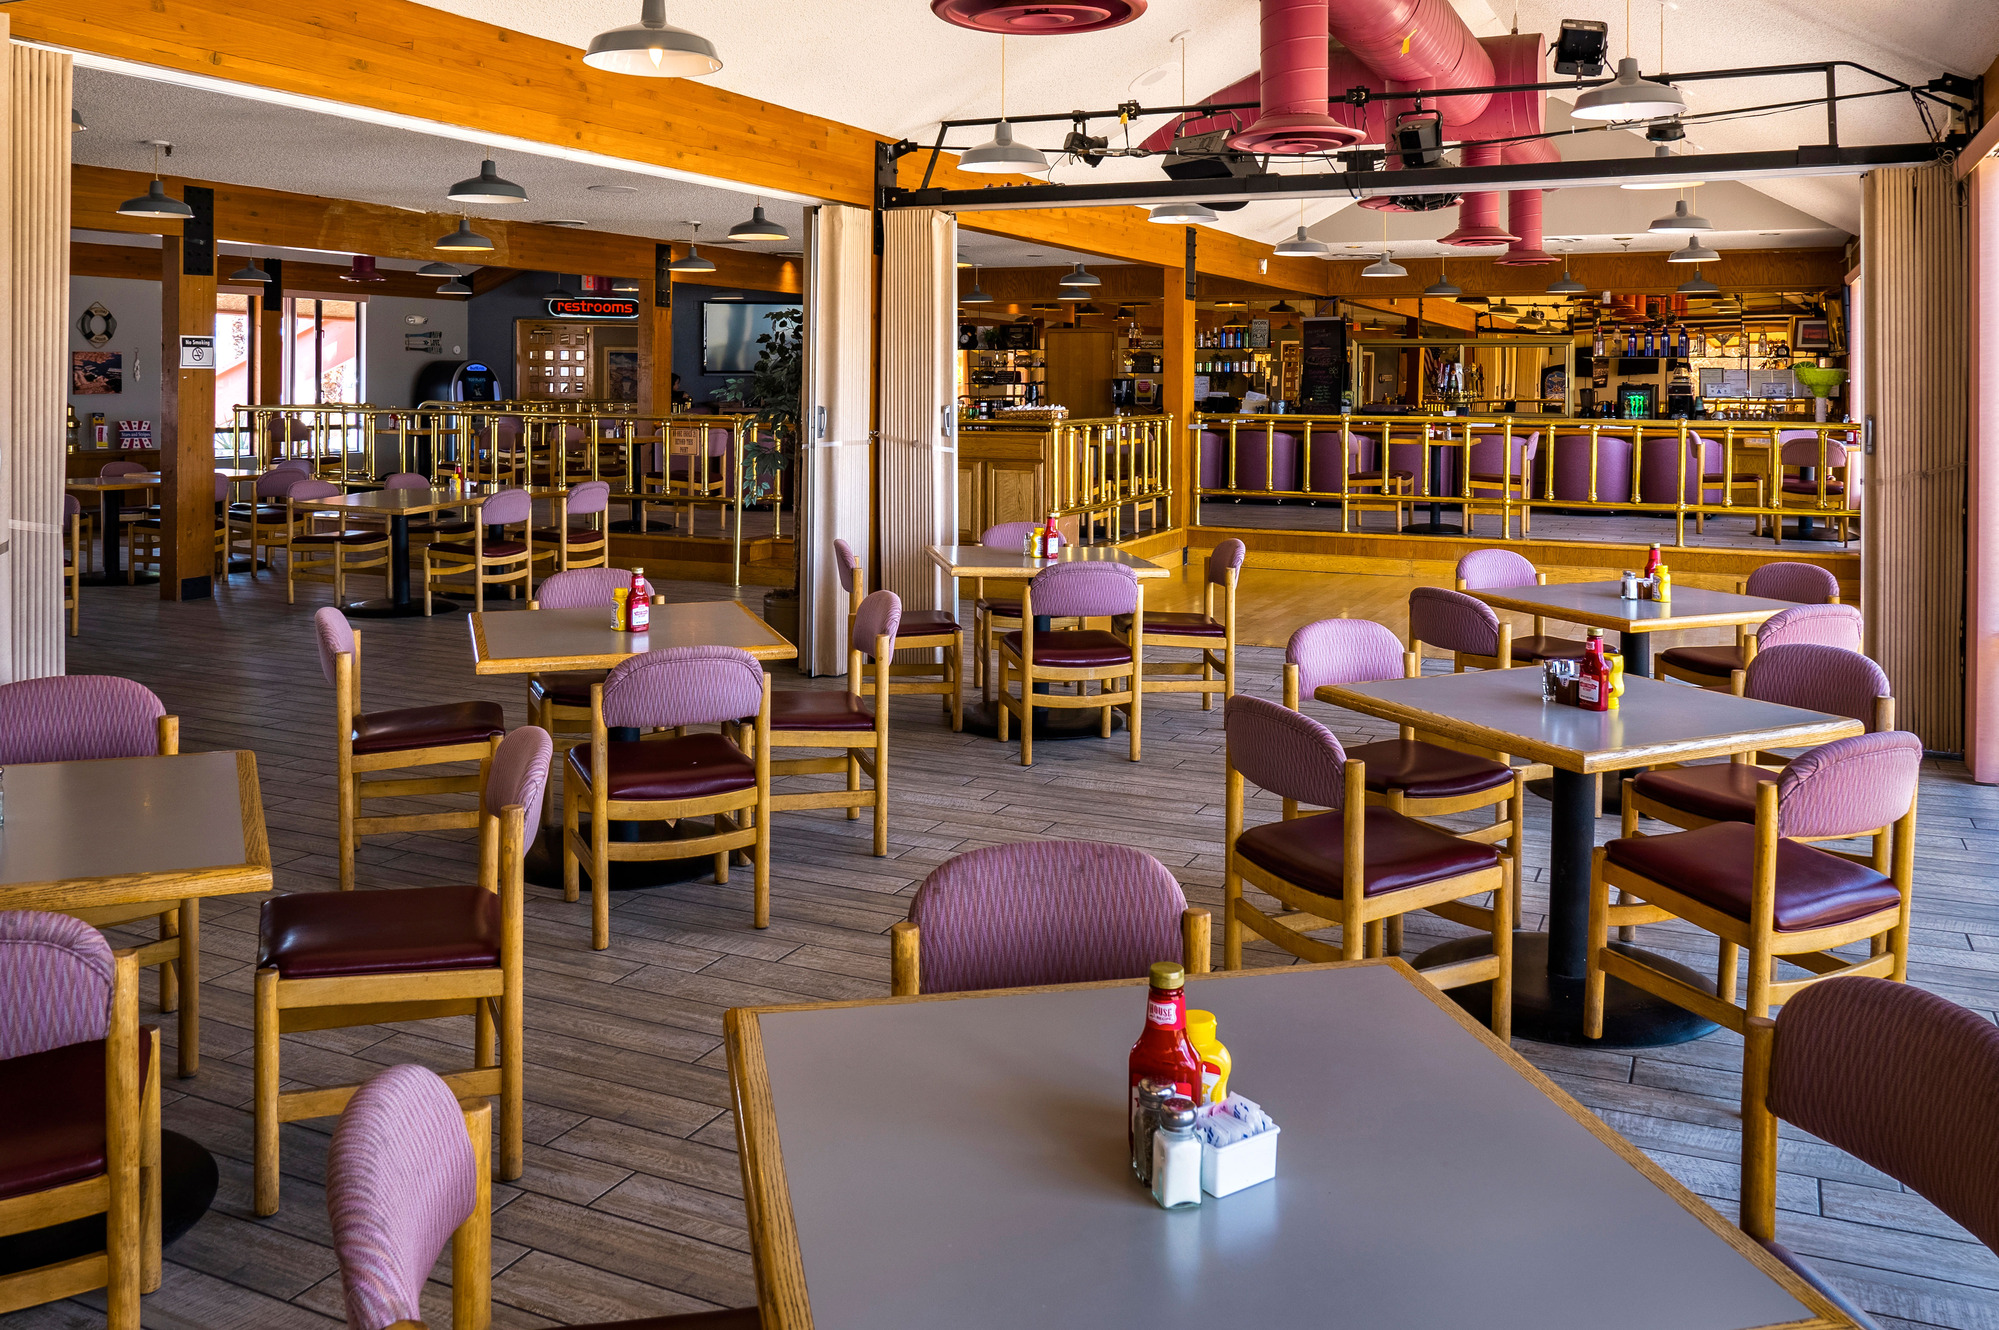 Empty tables, restaurant interior, wood fixtures, purple upholstery